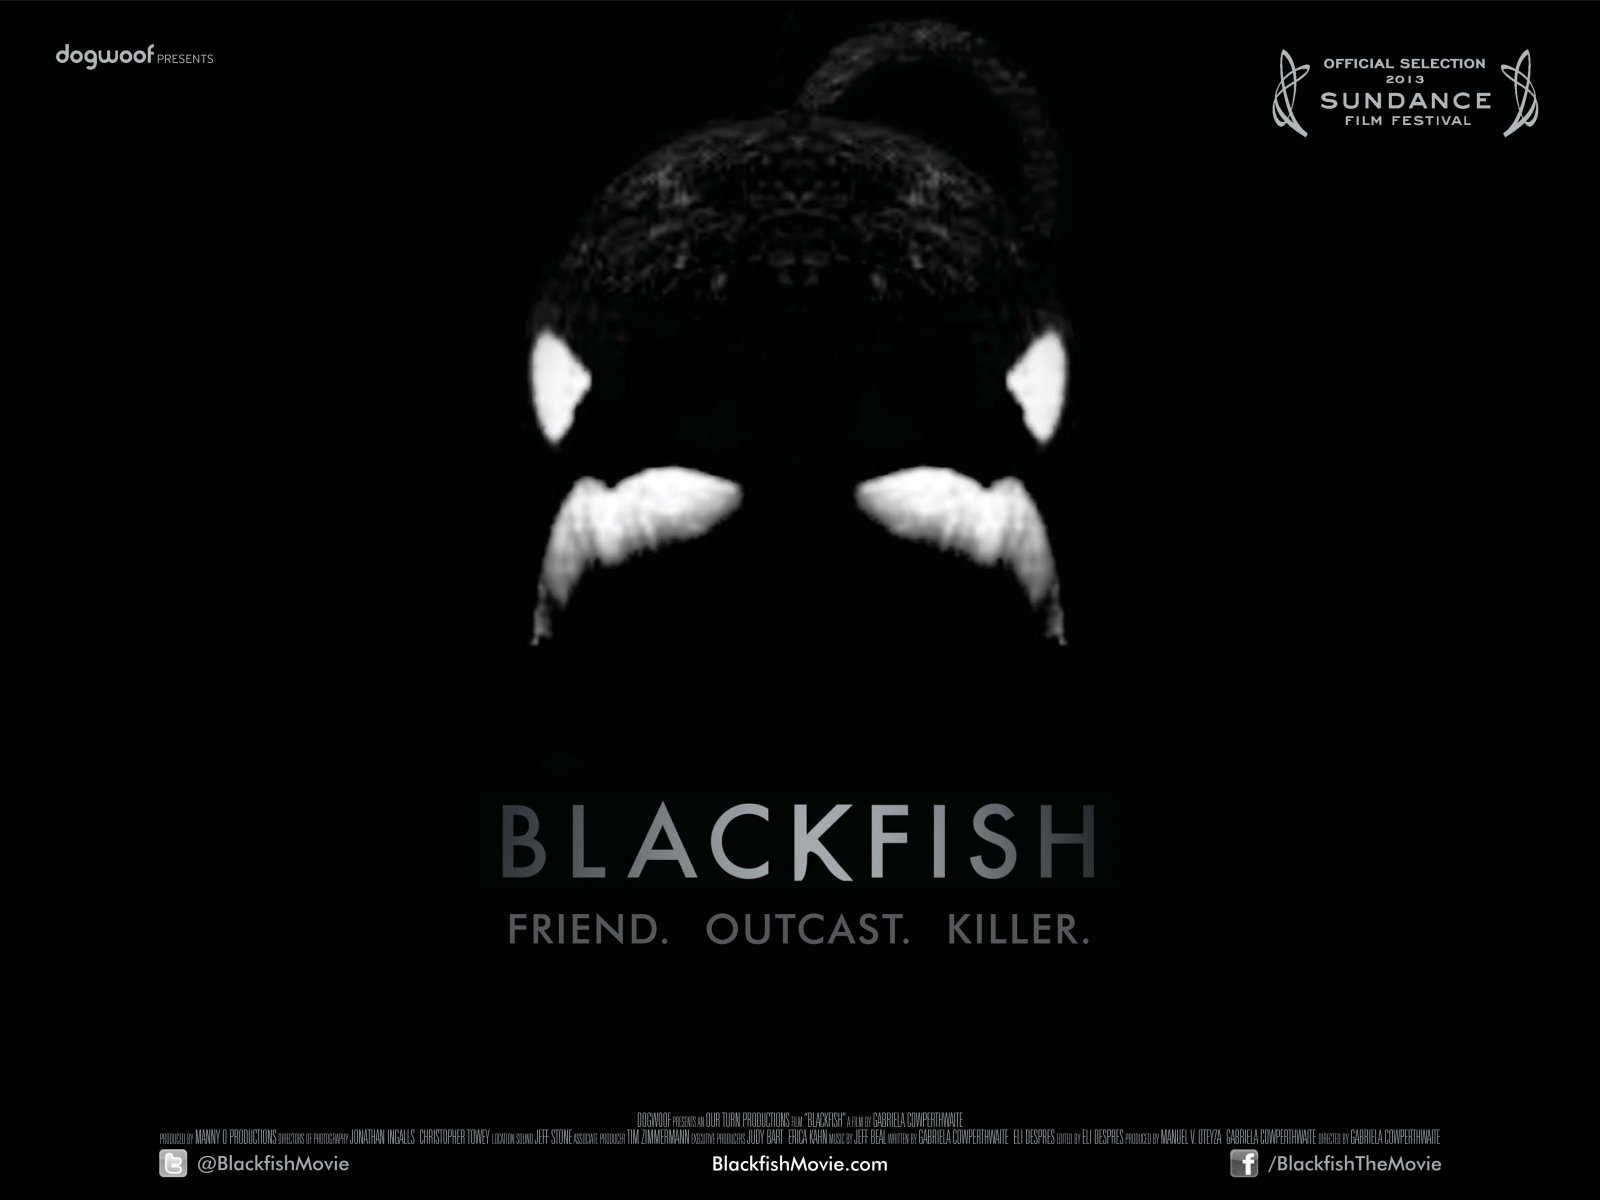 SeaWorld in Jeopardy After Blackfish Popularity